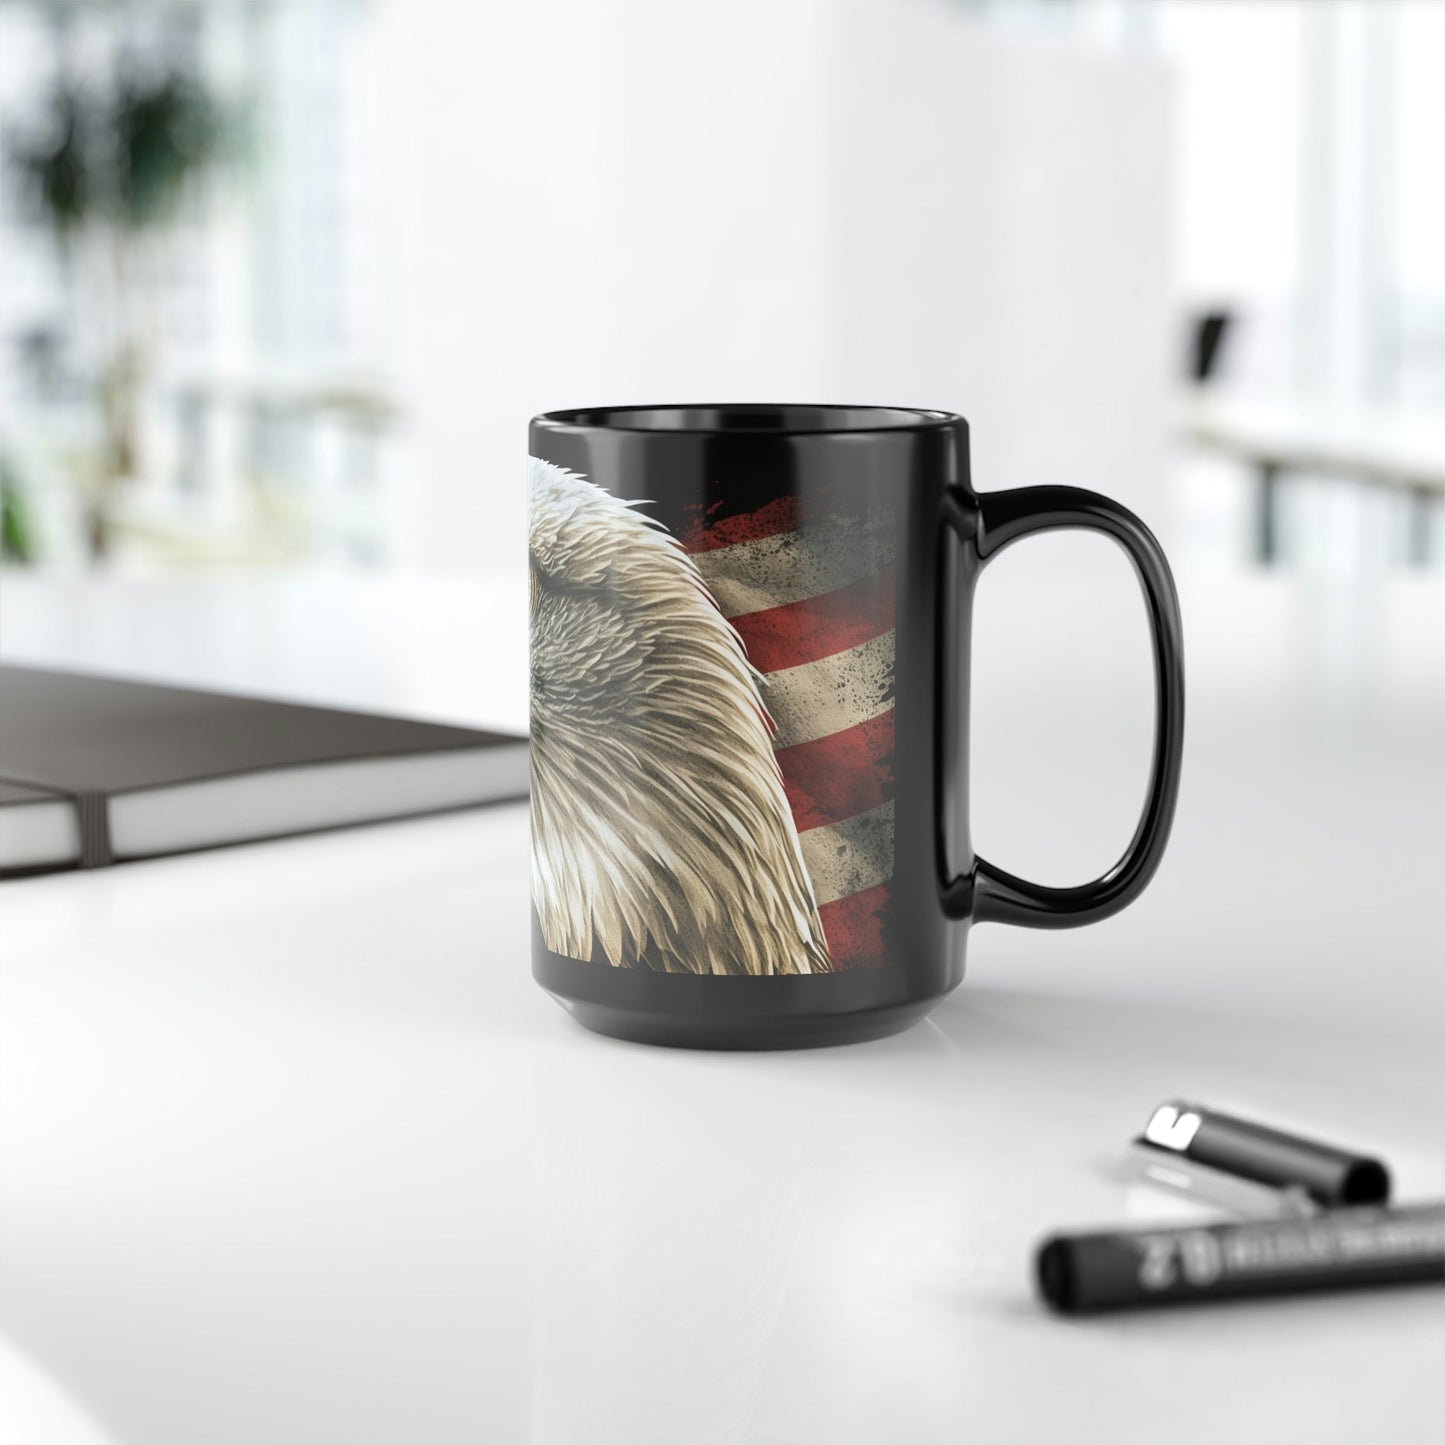 Blad Eagle with American Flag - Black 15 oz Blck Coffee Mug